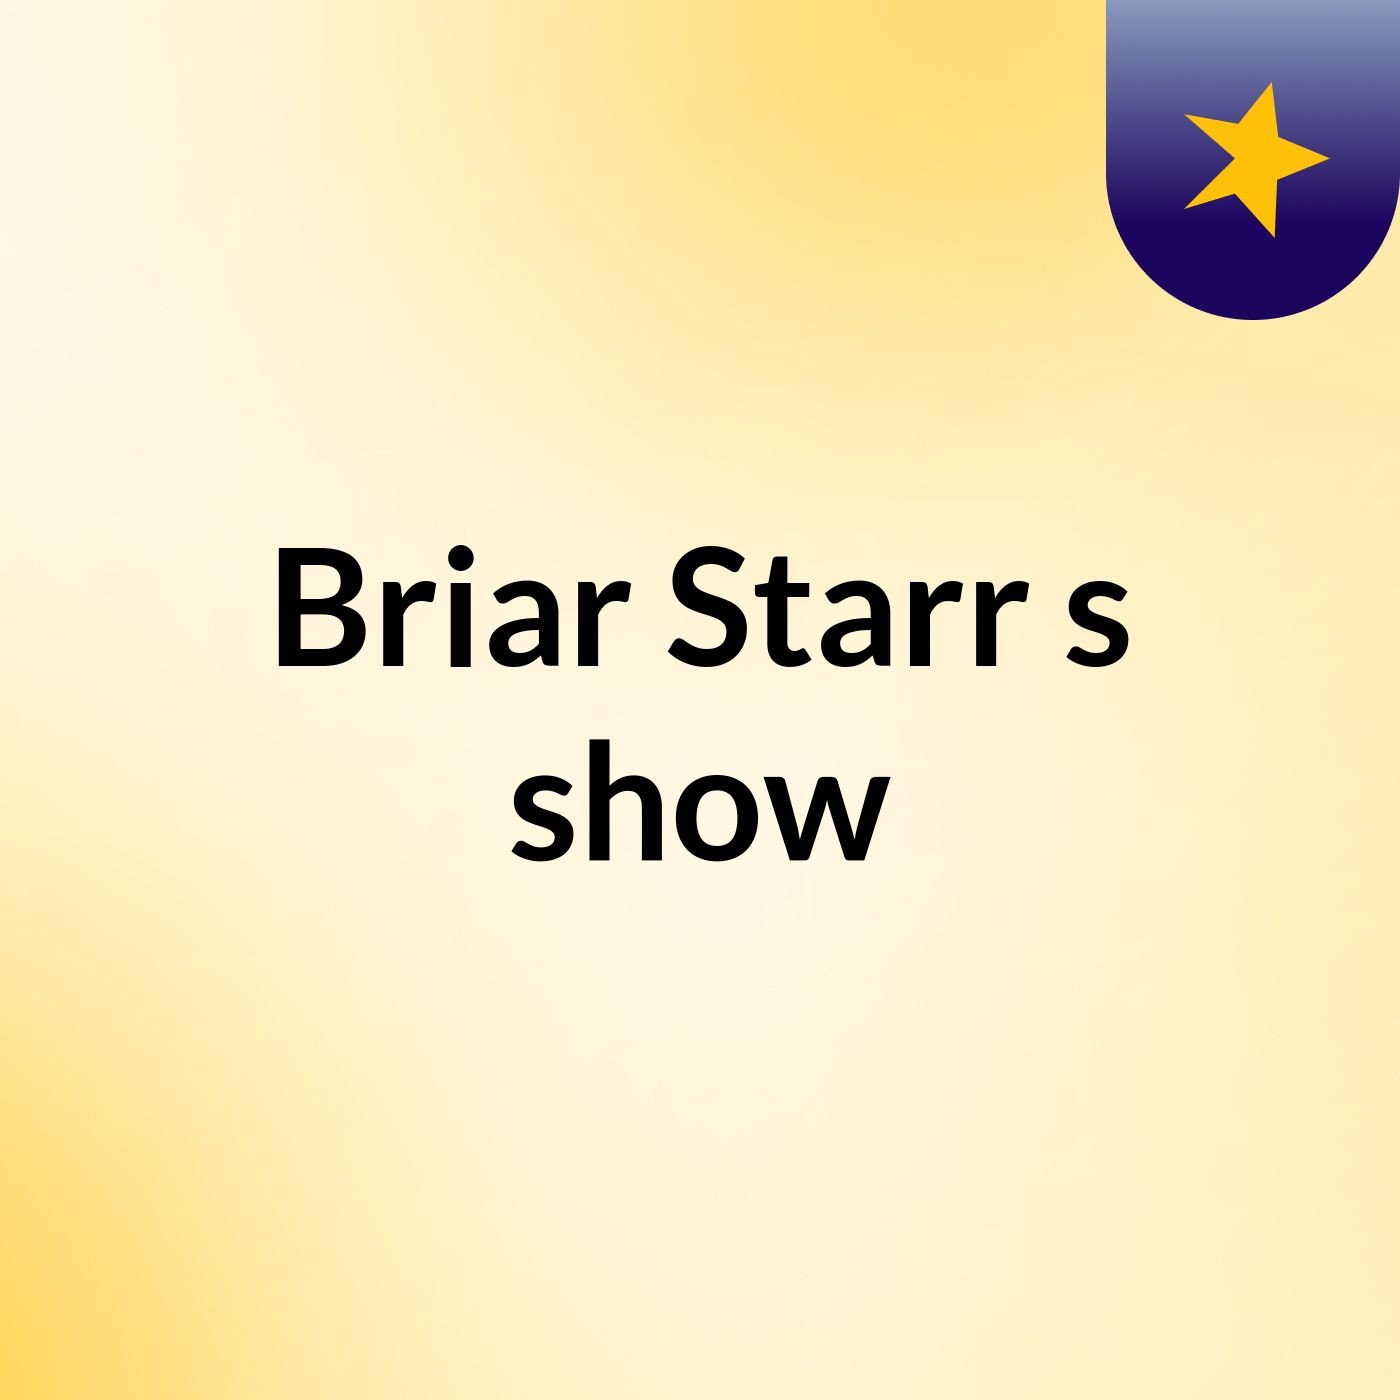 Briar Starr's show